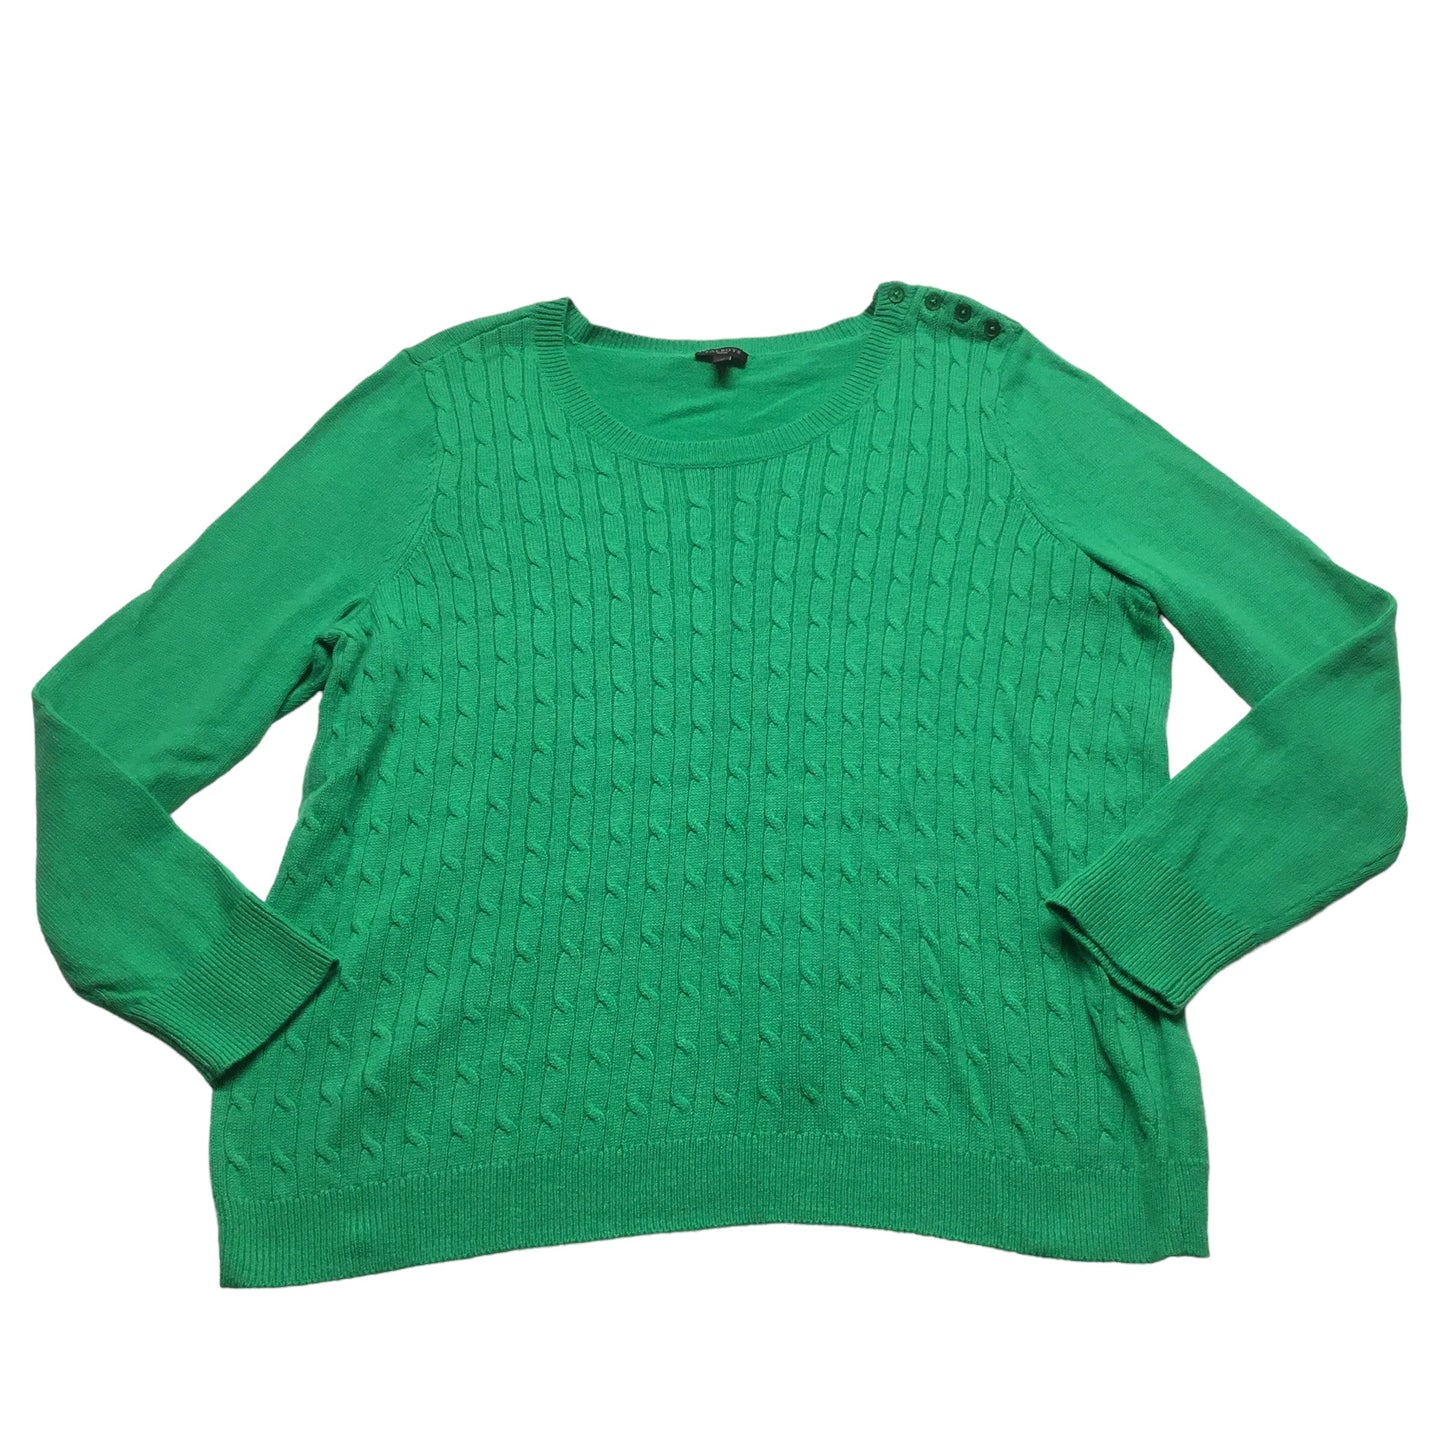 Green Sweater Talbots, Size 2x